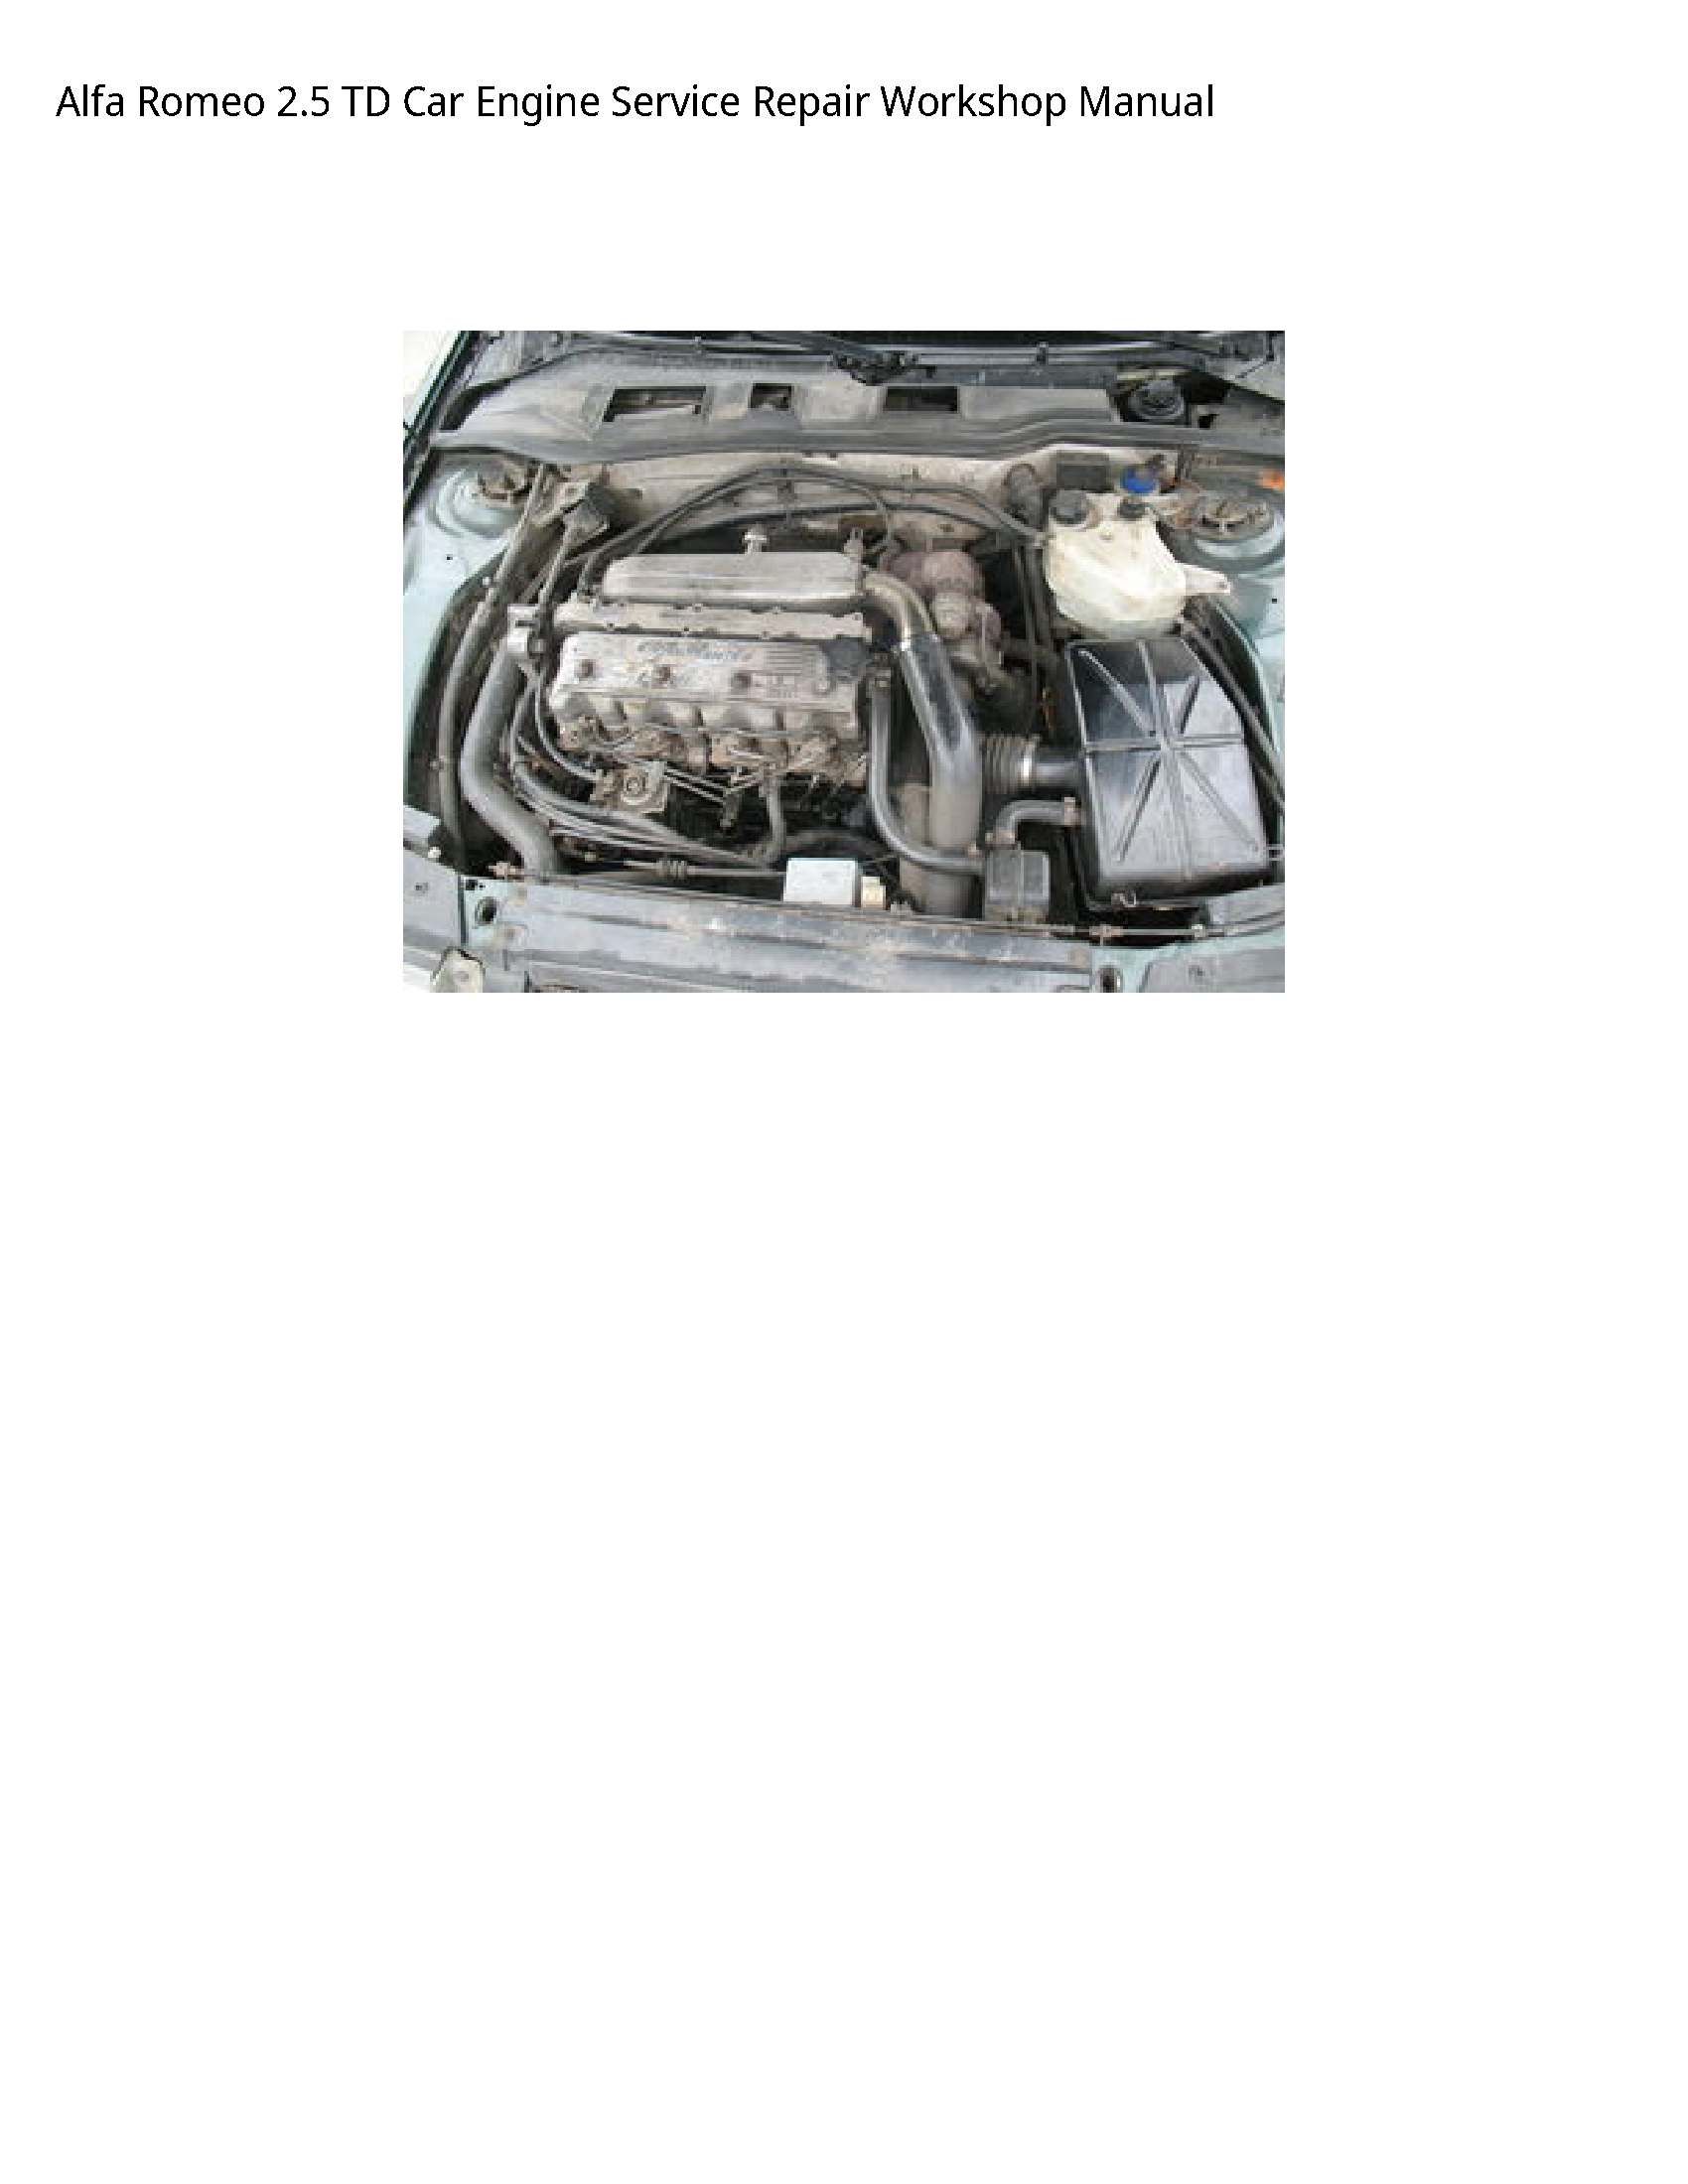 Alfa Romeo 2.5 TD Car Engine manual